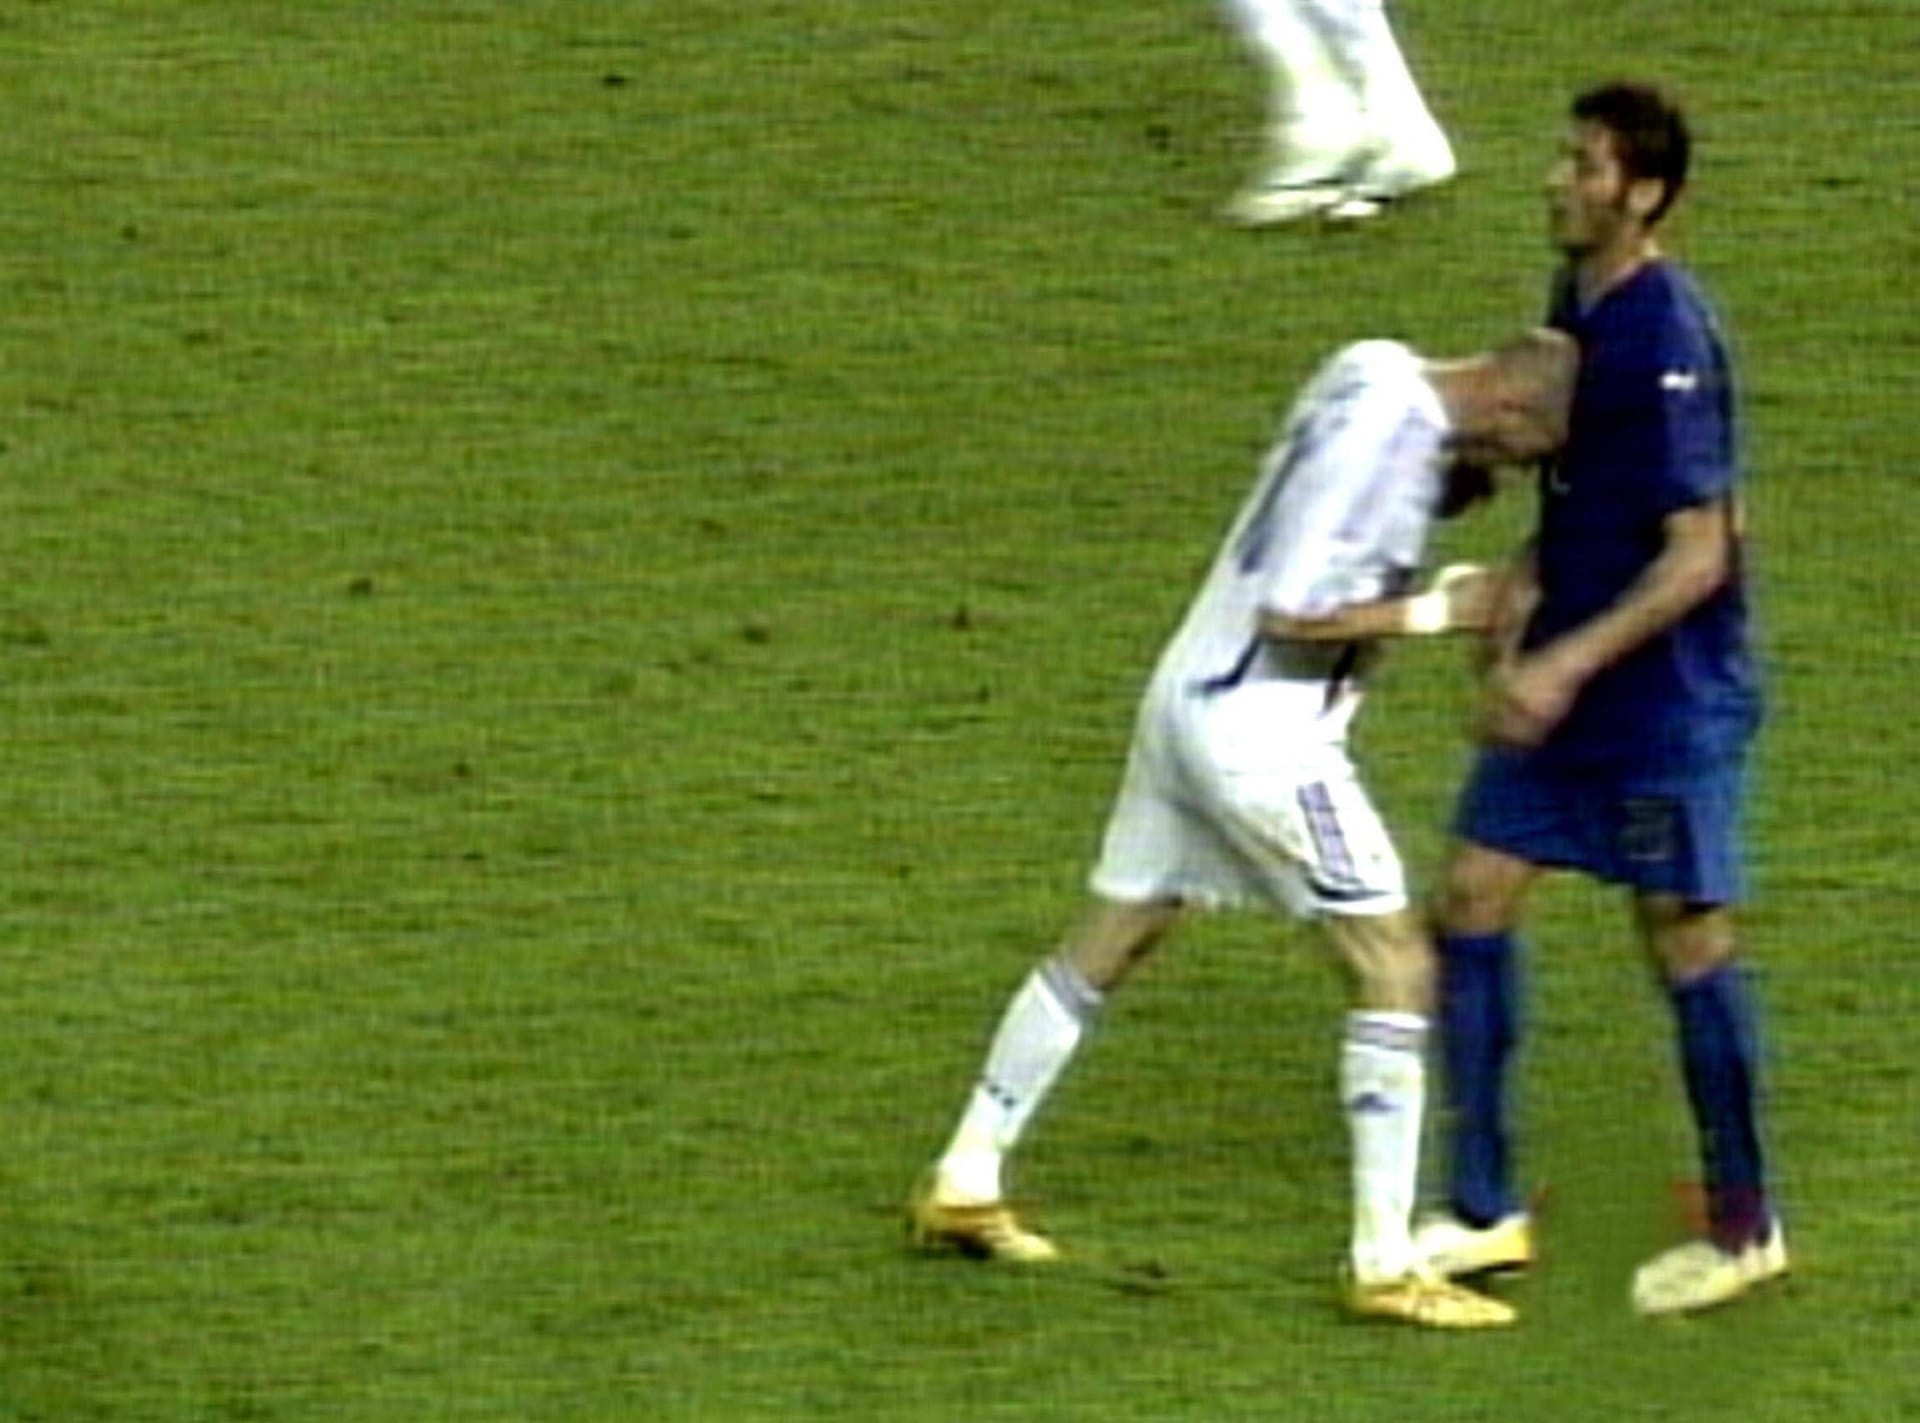 WM-Finale 2006 in Berlin (Archivbild): Zinedine Zidane stößt Marco Materazzi mit dem Kopf gegen die Brust.